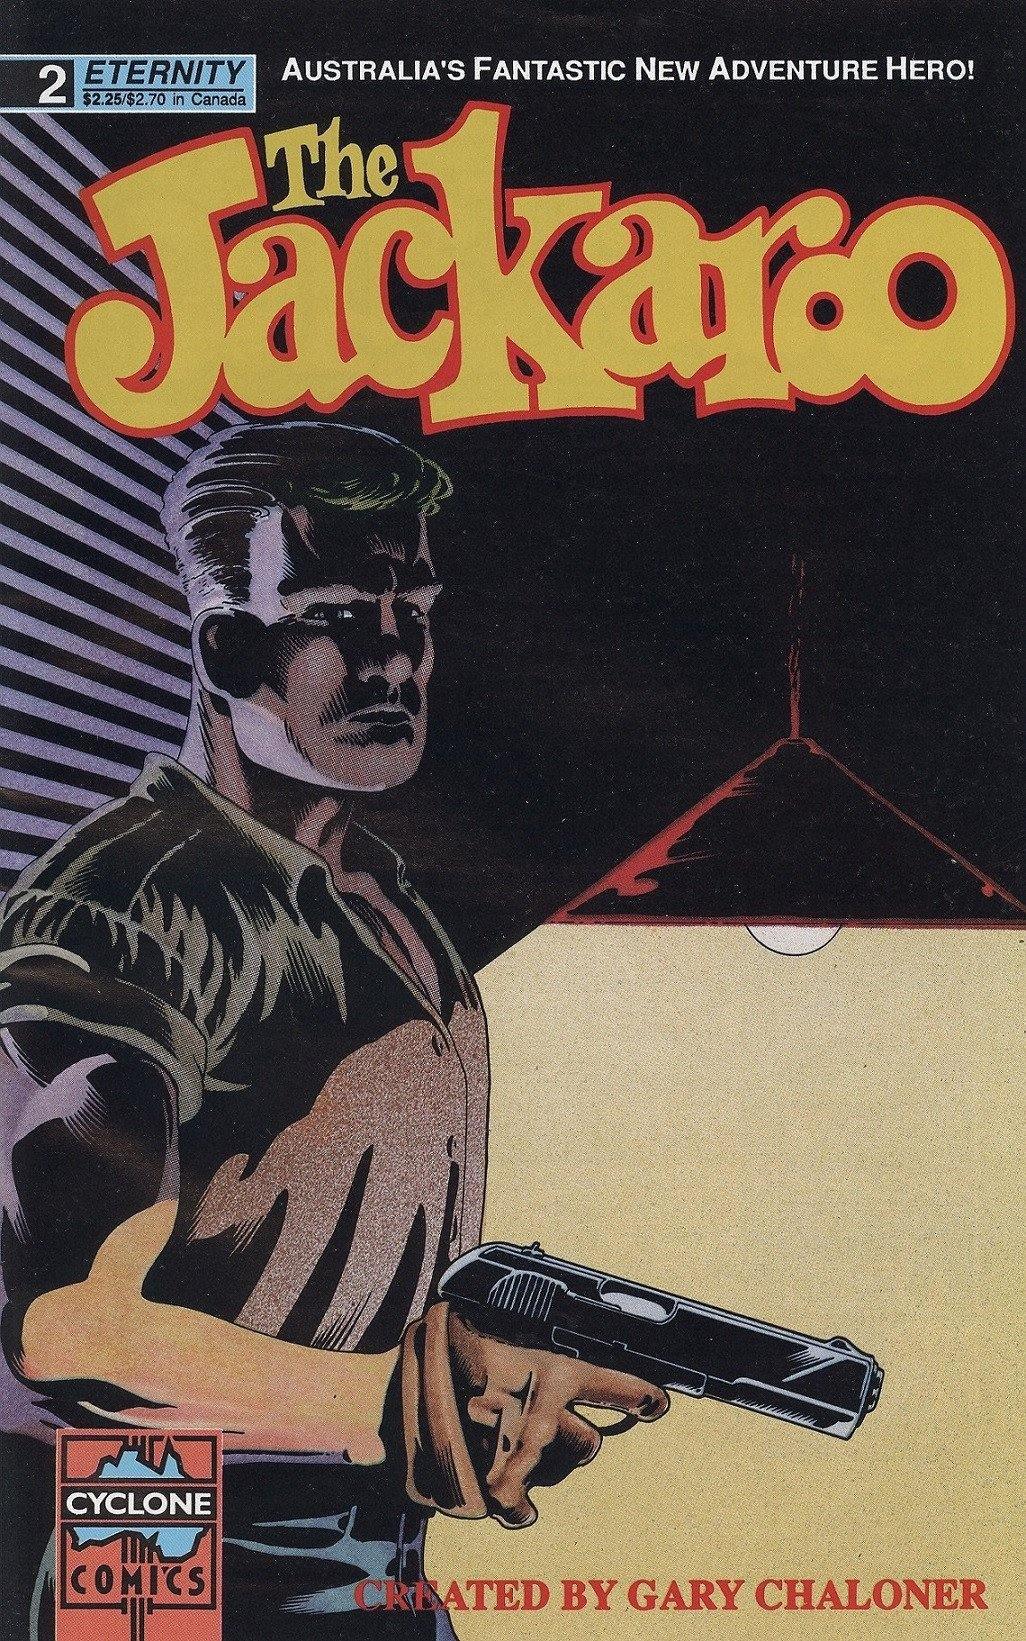 THE JACKAROO #2 - Kings Comics